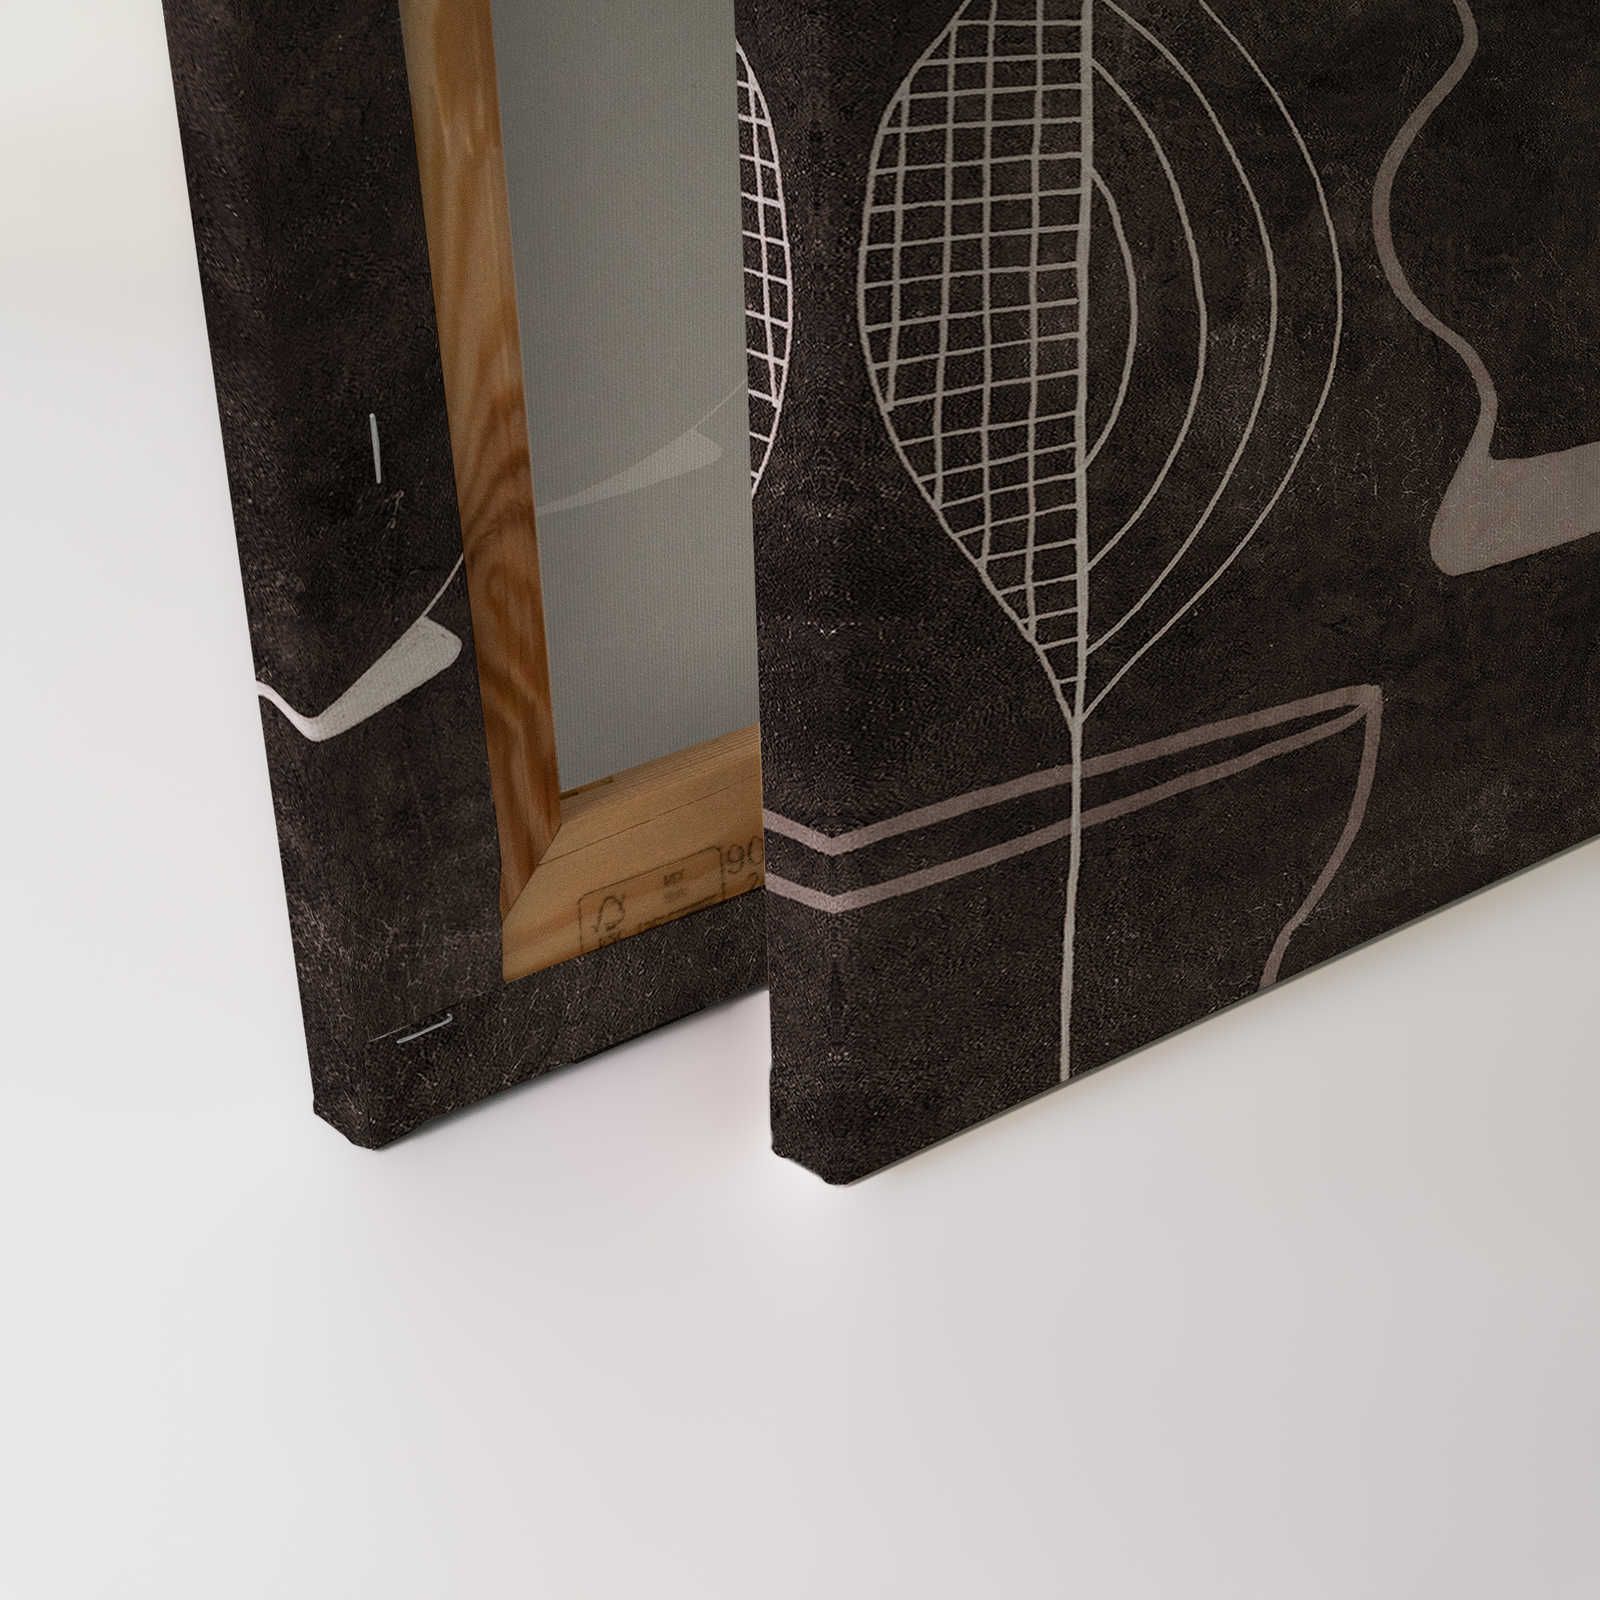             Pablos Room 2 - Pittura su tela nera con motivi retrò - 0,90 m x 0,60 m
        